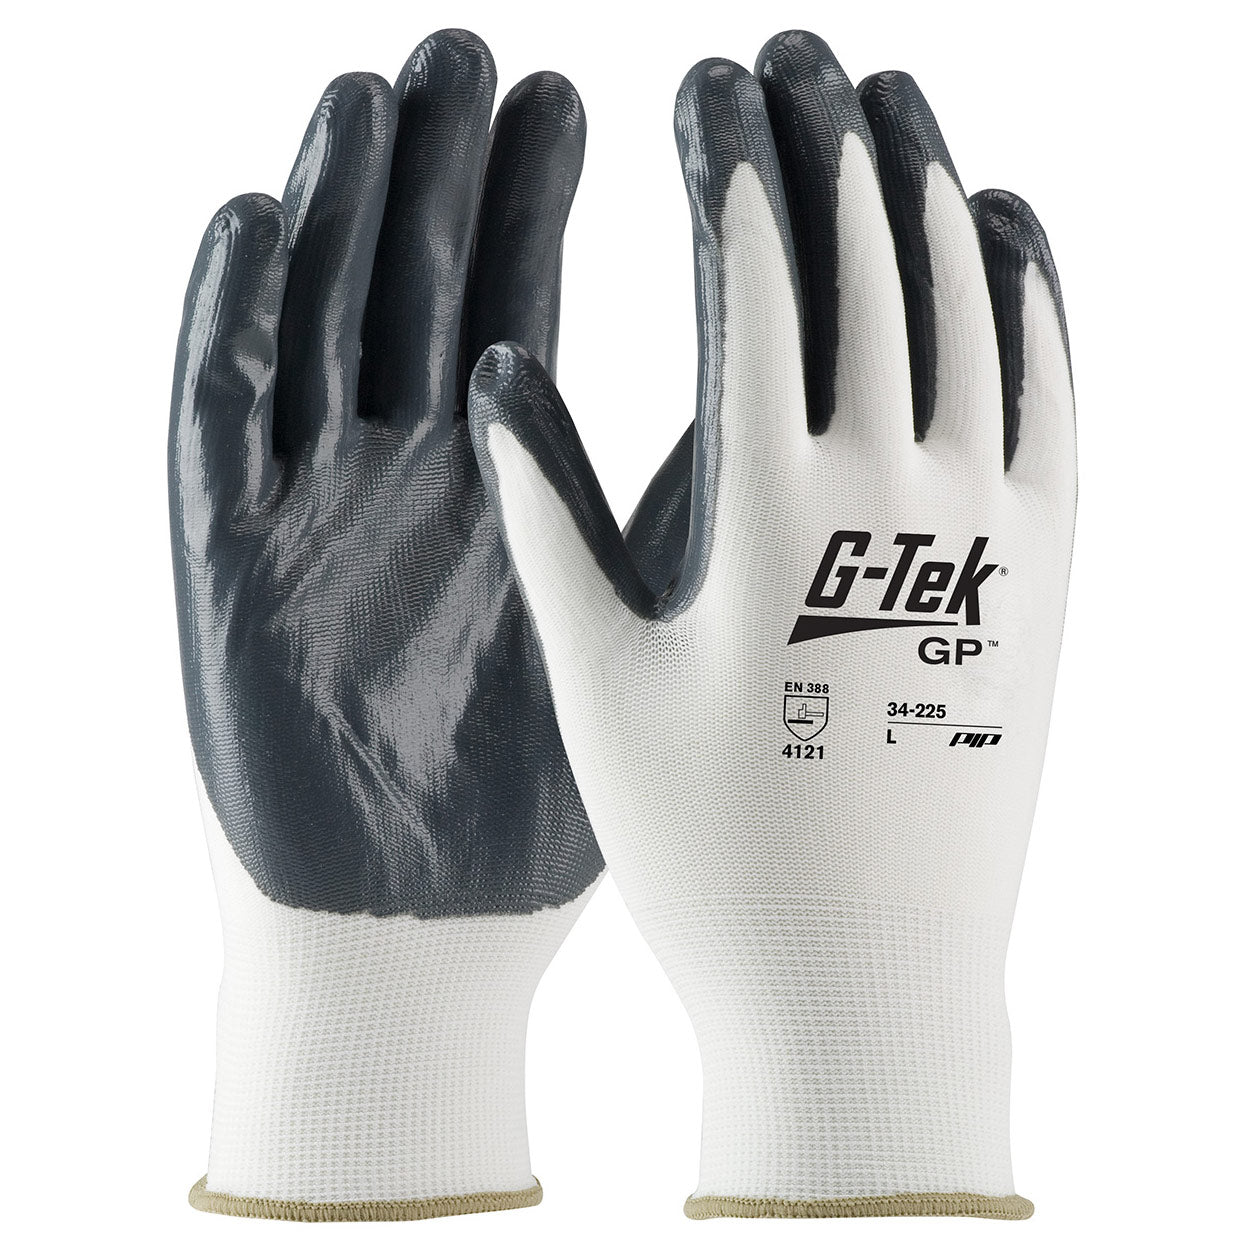 PIP 34-225 G-Tek NPG Seamless Knit Nylon Gloves - Nitrile Coated Smooth Grip on Palm & Fingers (DZ)-eSafety Supplies, Inc